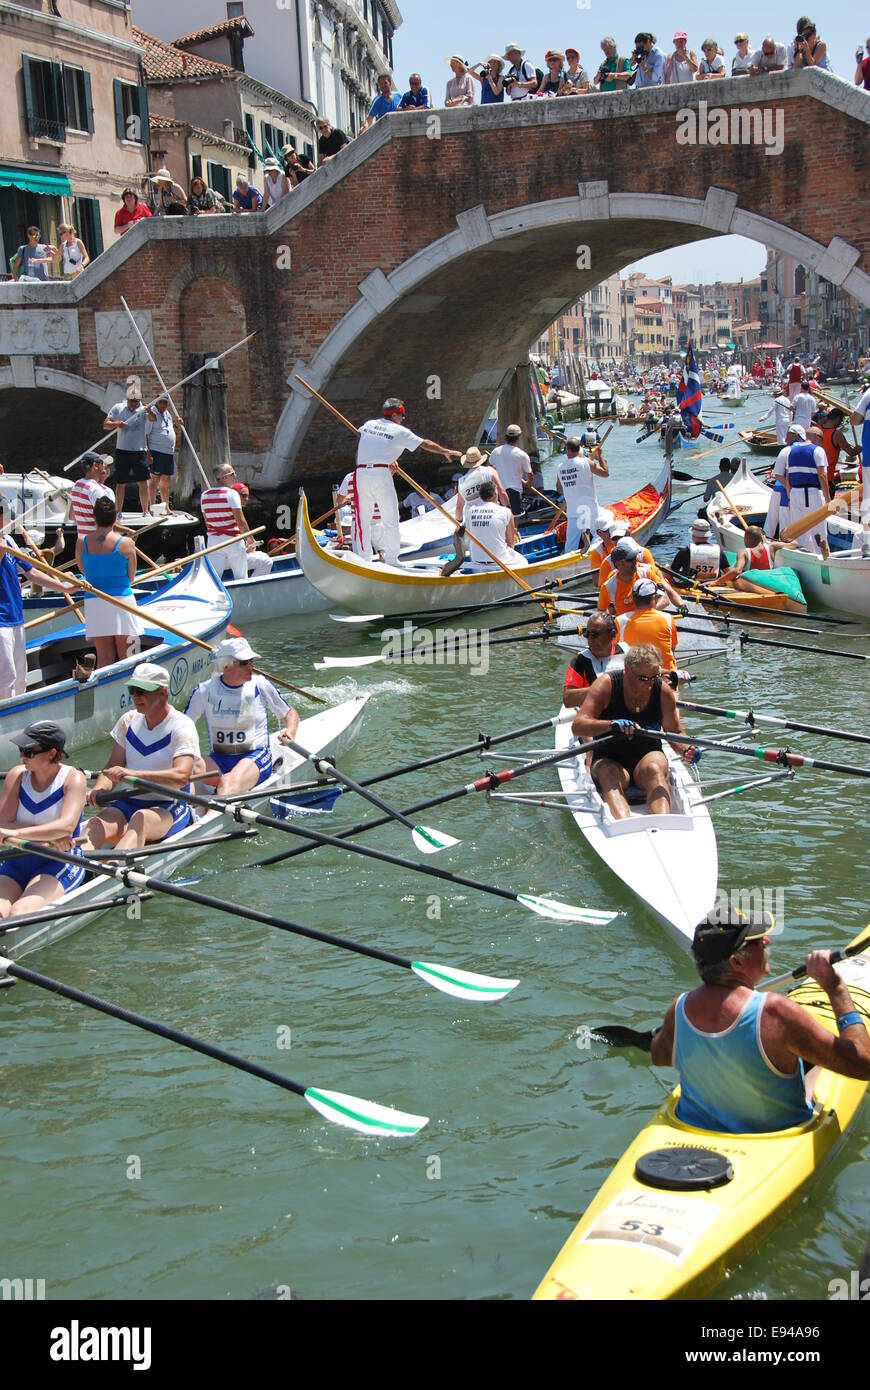 Italien. Venedig. Vogalonga 2014. Große und Kanus. Ruder. Warteschlange unter Brücke bekommen. Chaos. Stockfoto